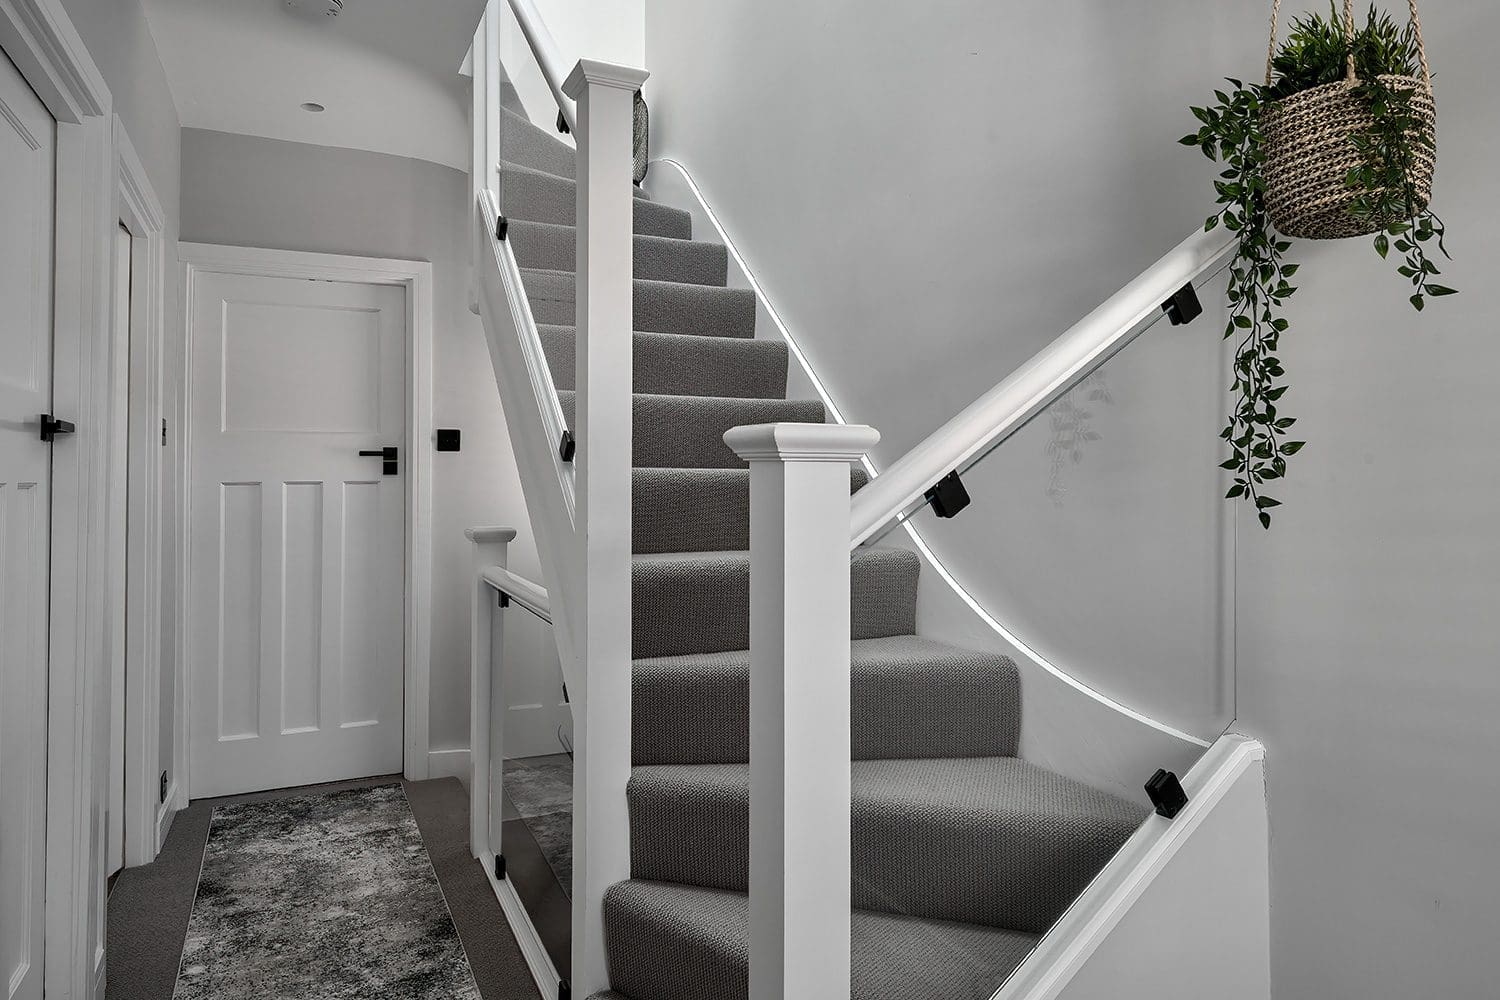 loft conversion staircase ideas - sleek glass staircase of loft conversion